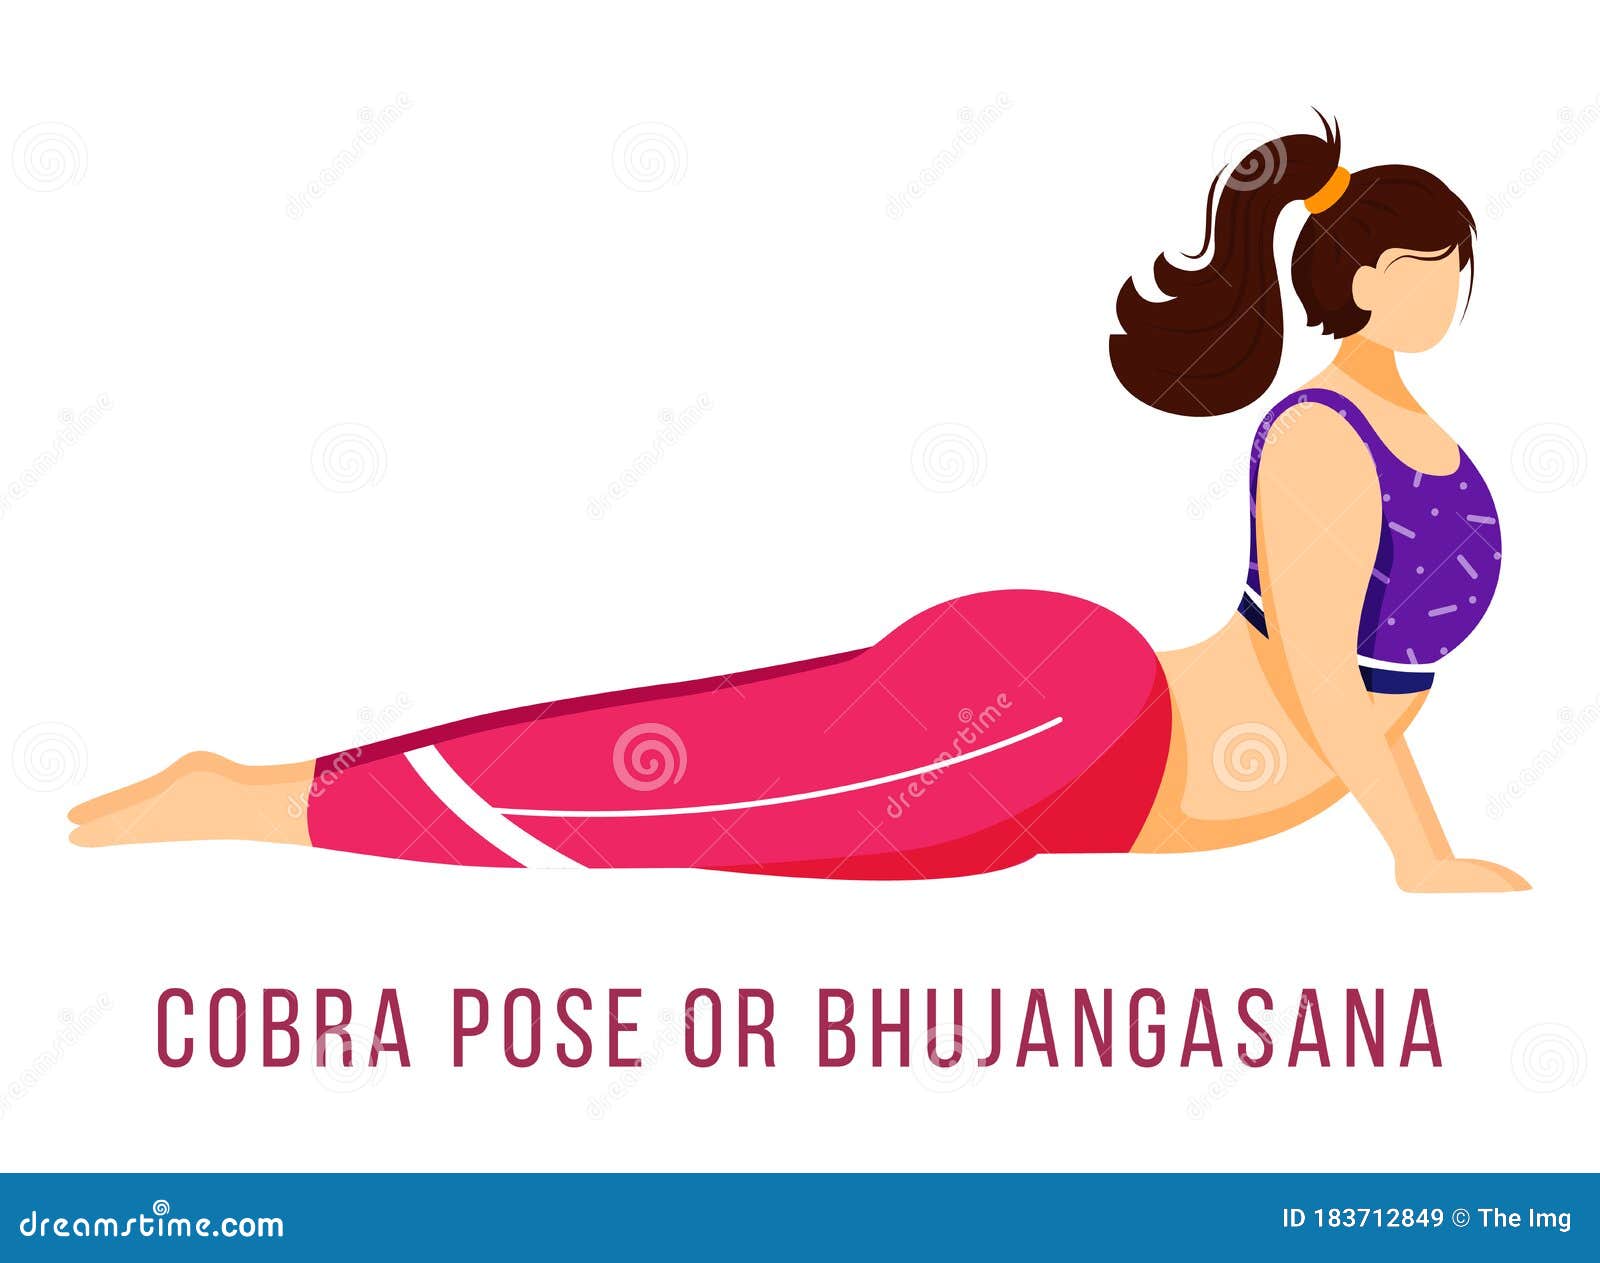 Ashtanga yoga pose hi-res stock photography and images - Alamy